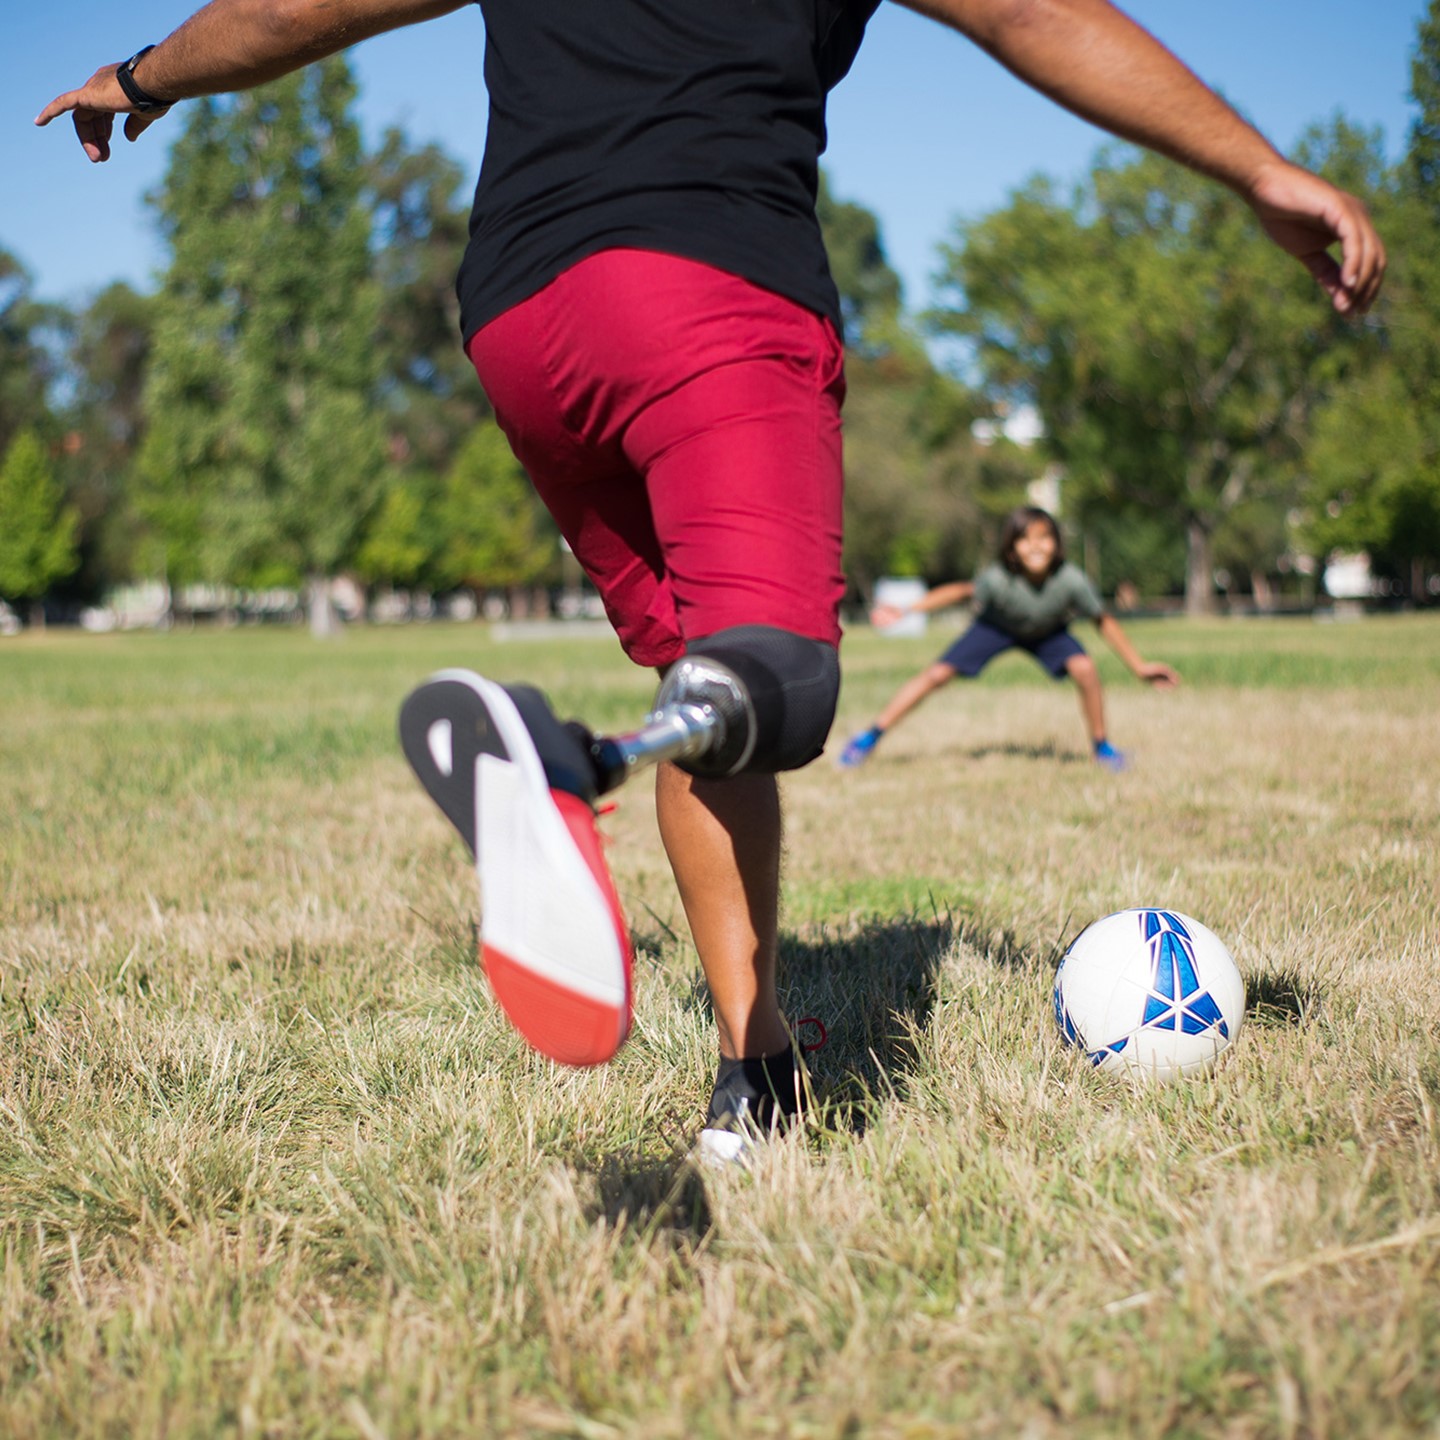 Man with prosthetic leg kicking football to child